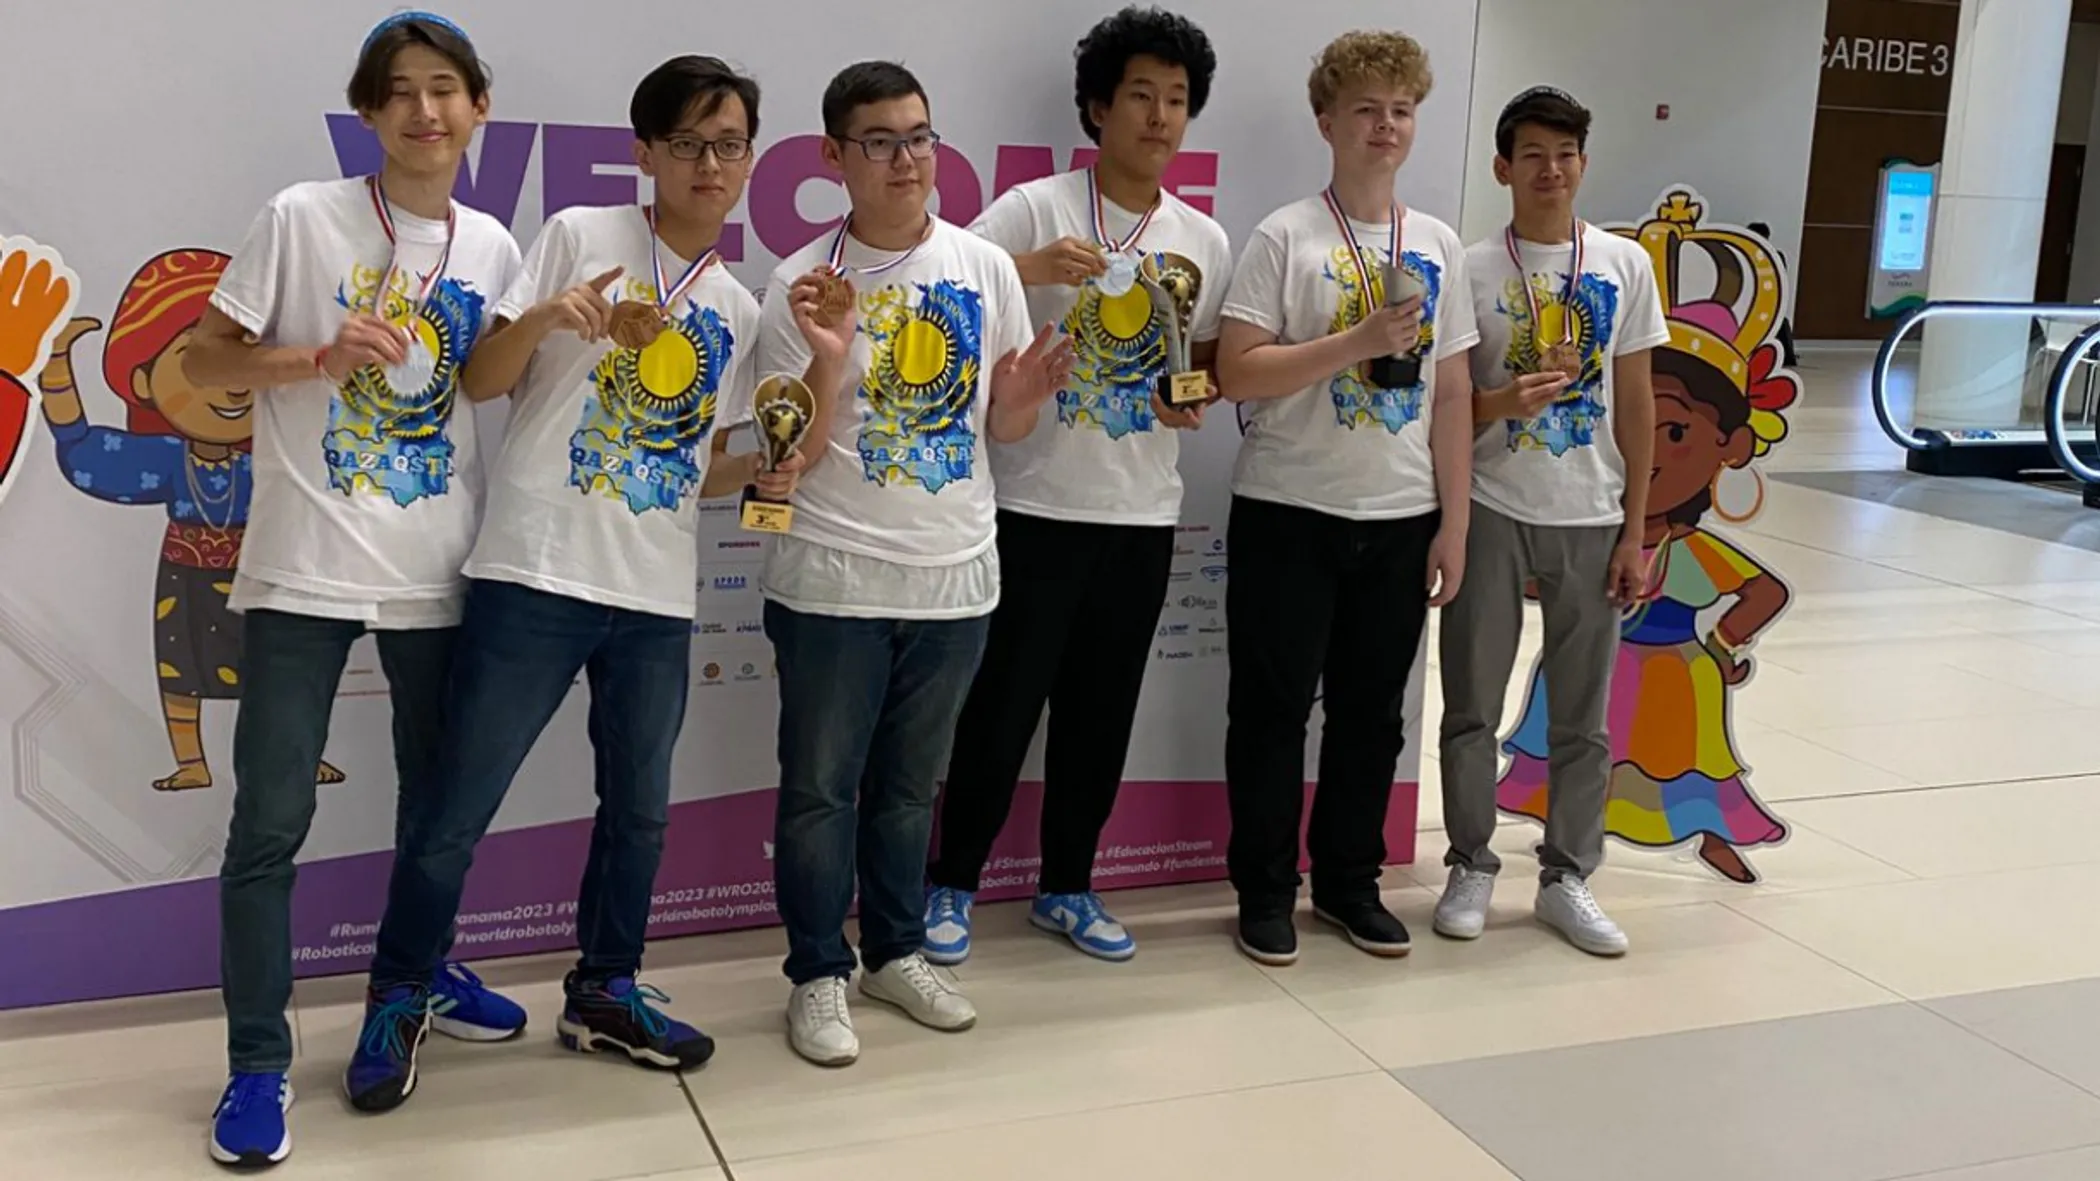 Kazakhstan's national robotics team